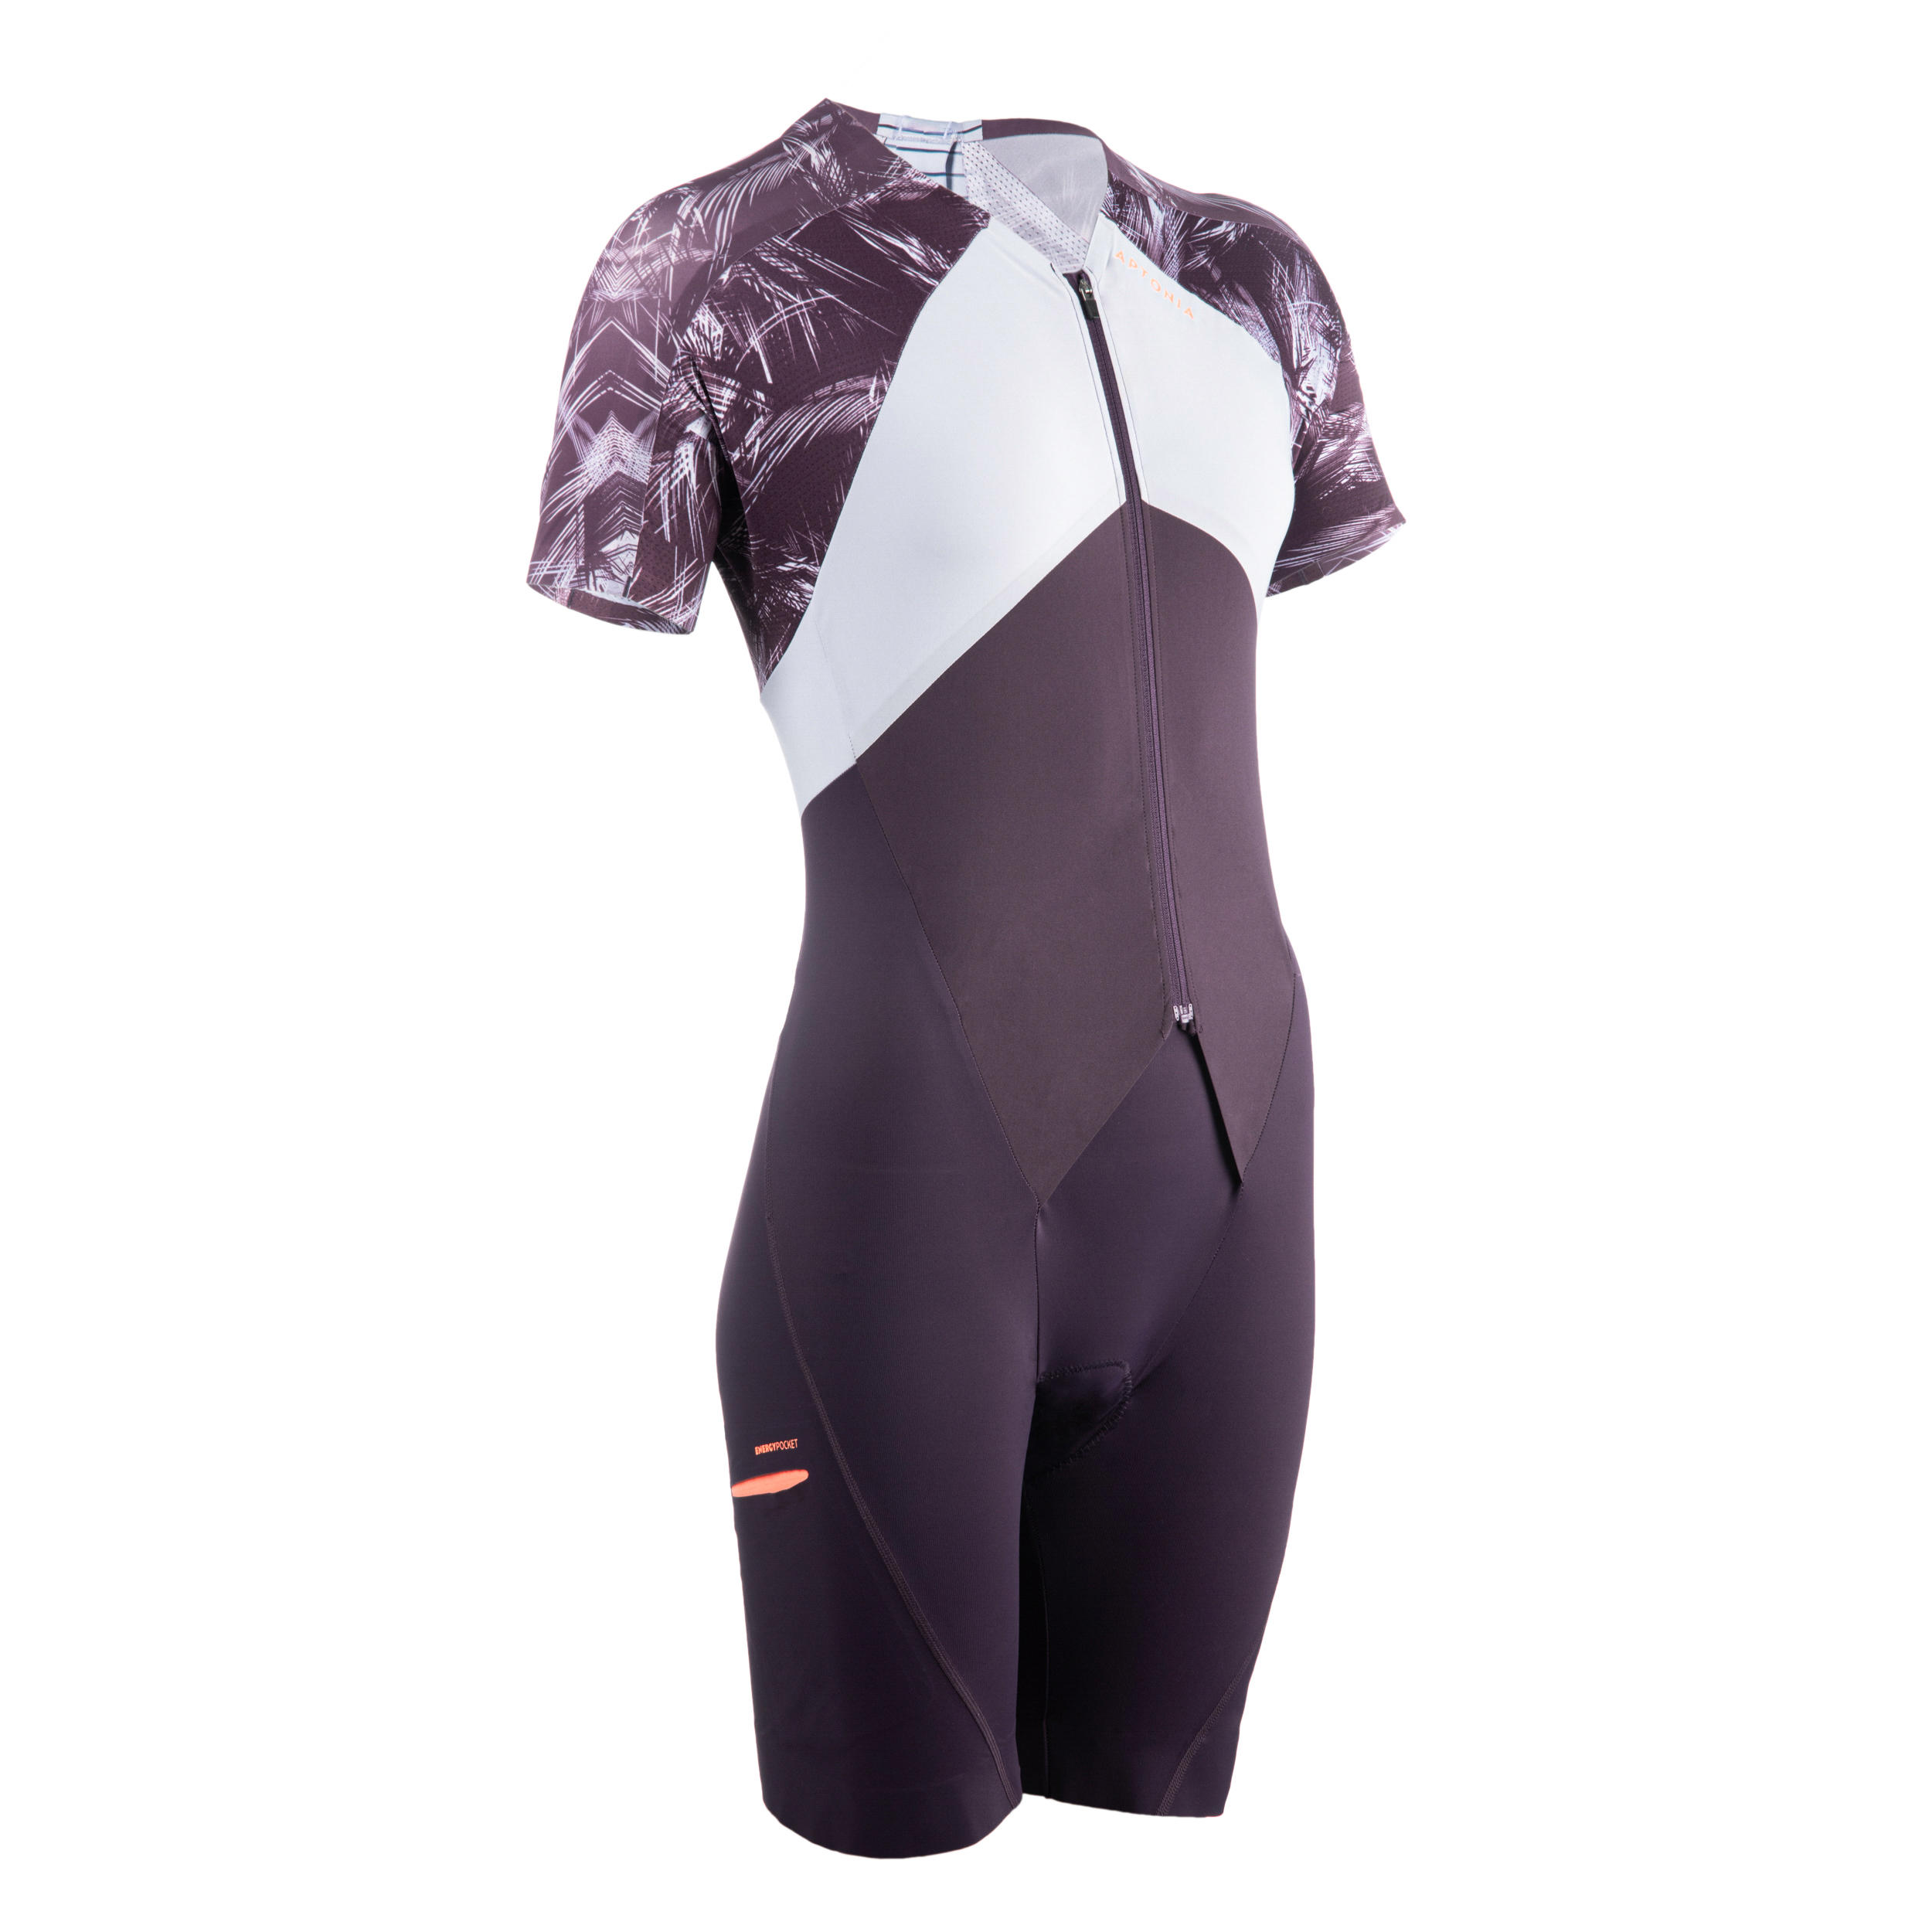 Decathlon UK Van Rysel Women's Long-distance Trisuit - Purple